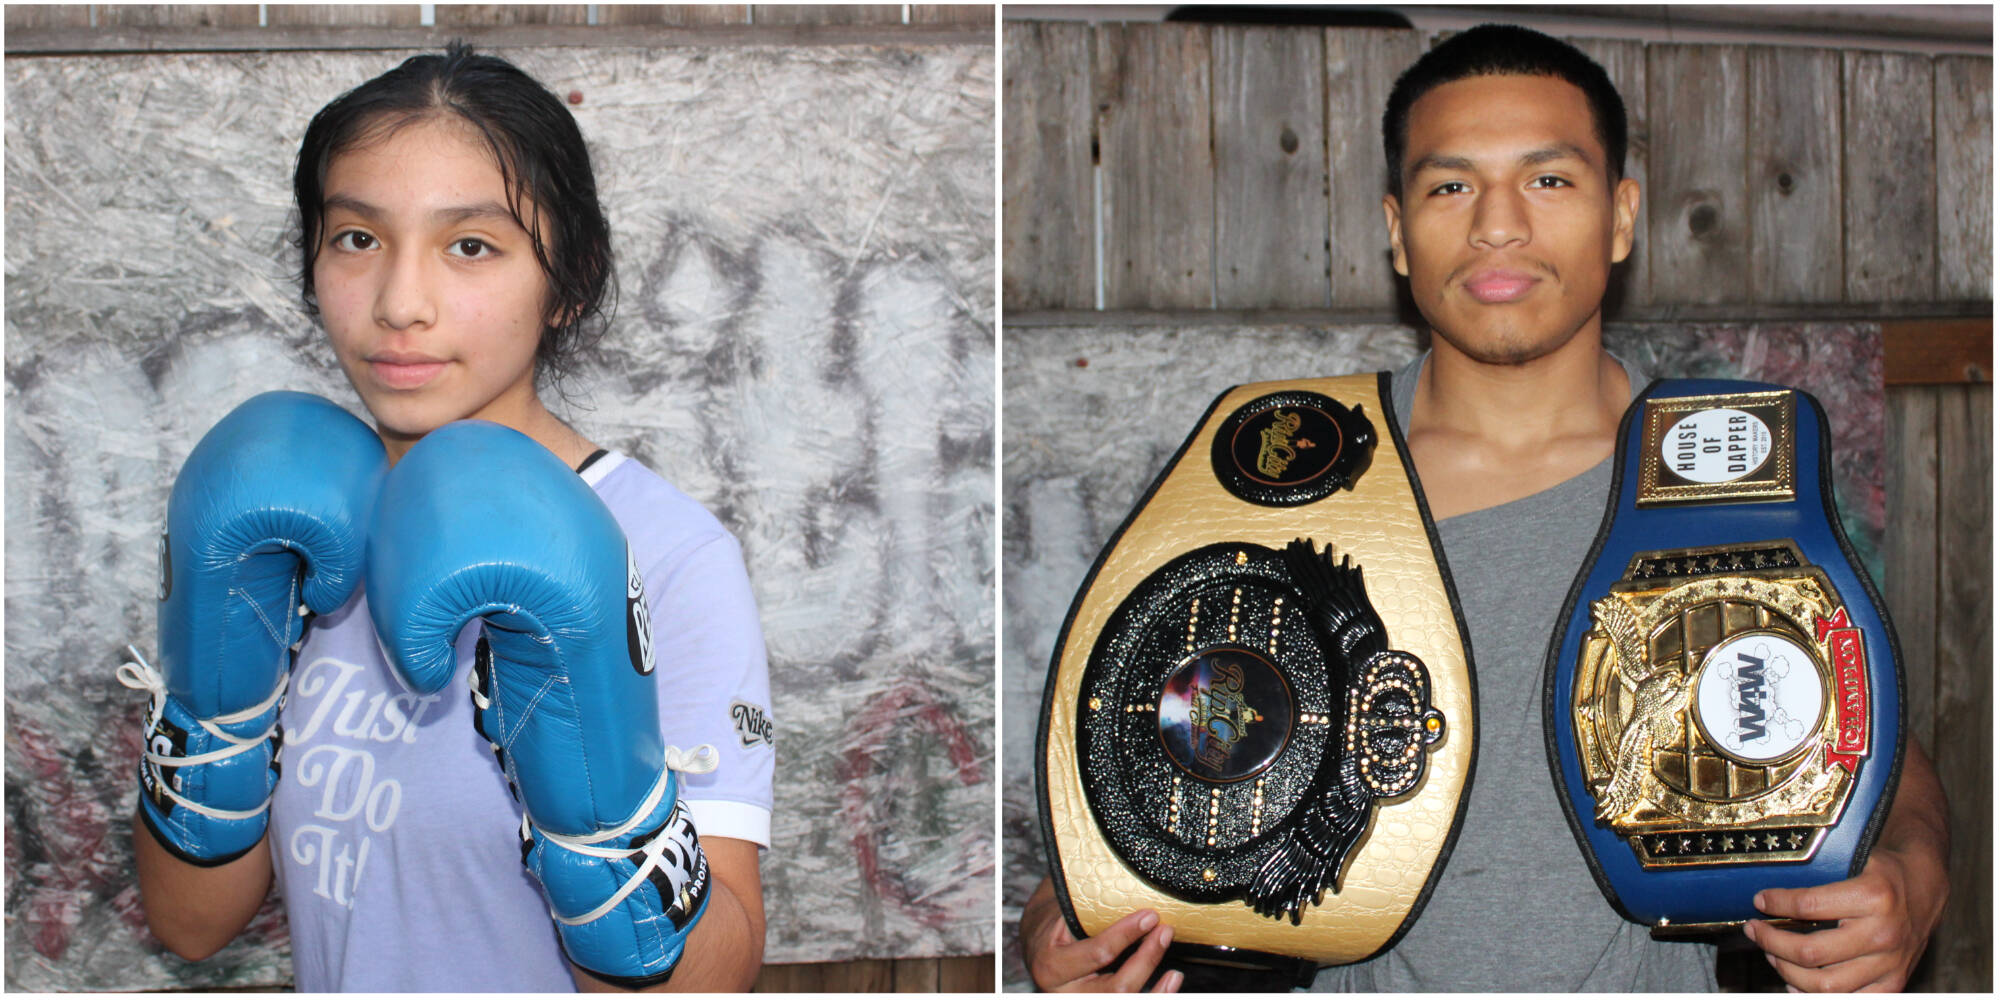 Bailey Jo Josie/Sound Publishing
Yaretzi Reyes (left) and Josue Cadena pose outside the Tenochtitlan Boxing Club.